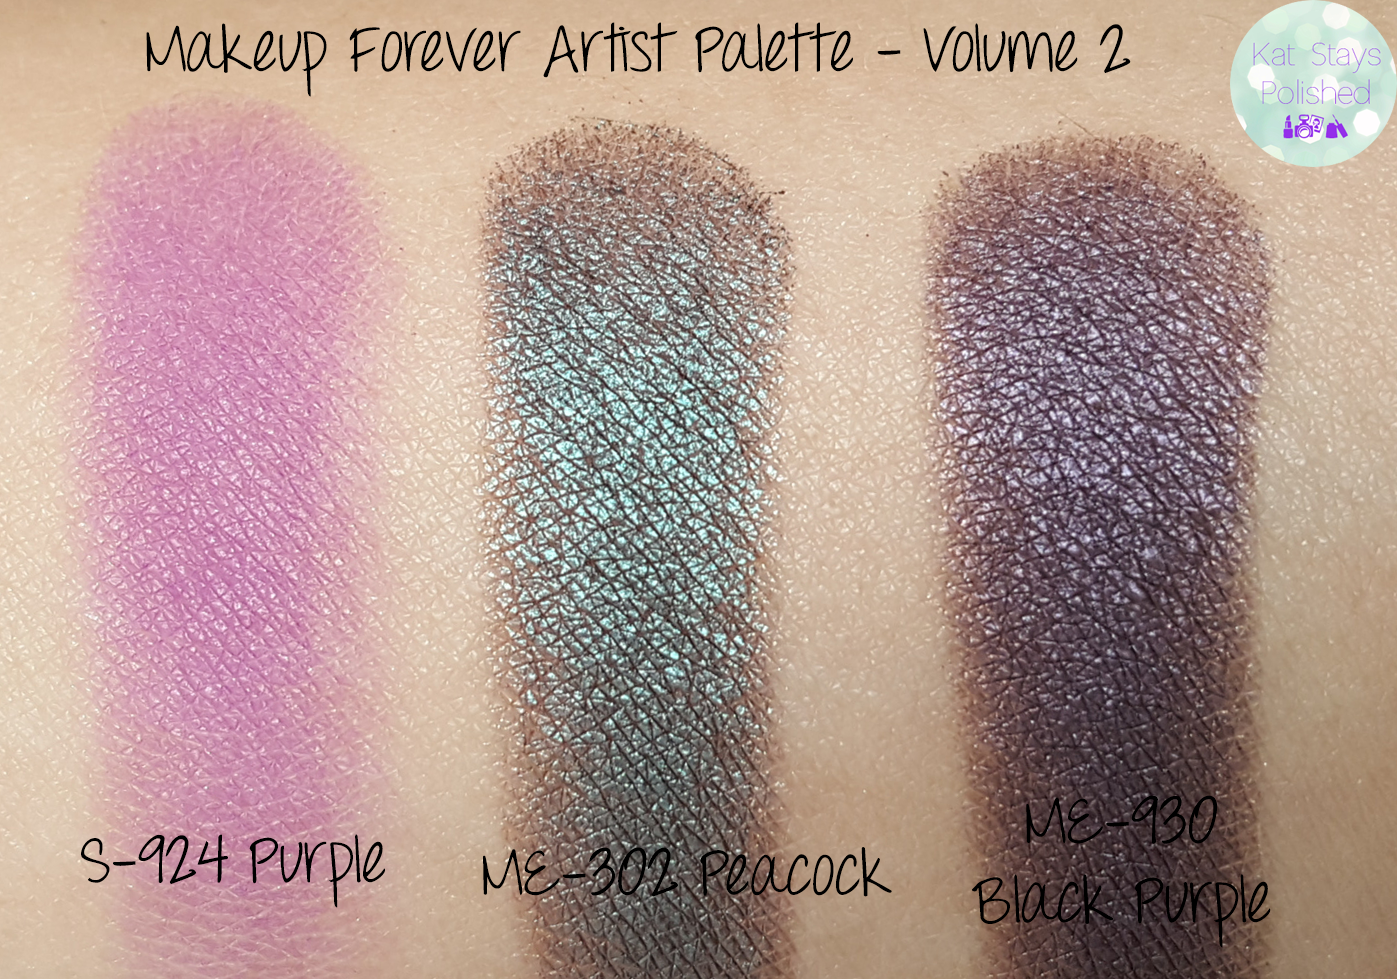 Makeup Forever Artist Palette Volume 2